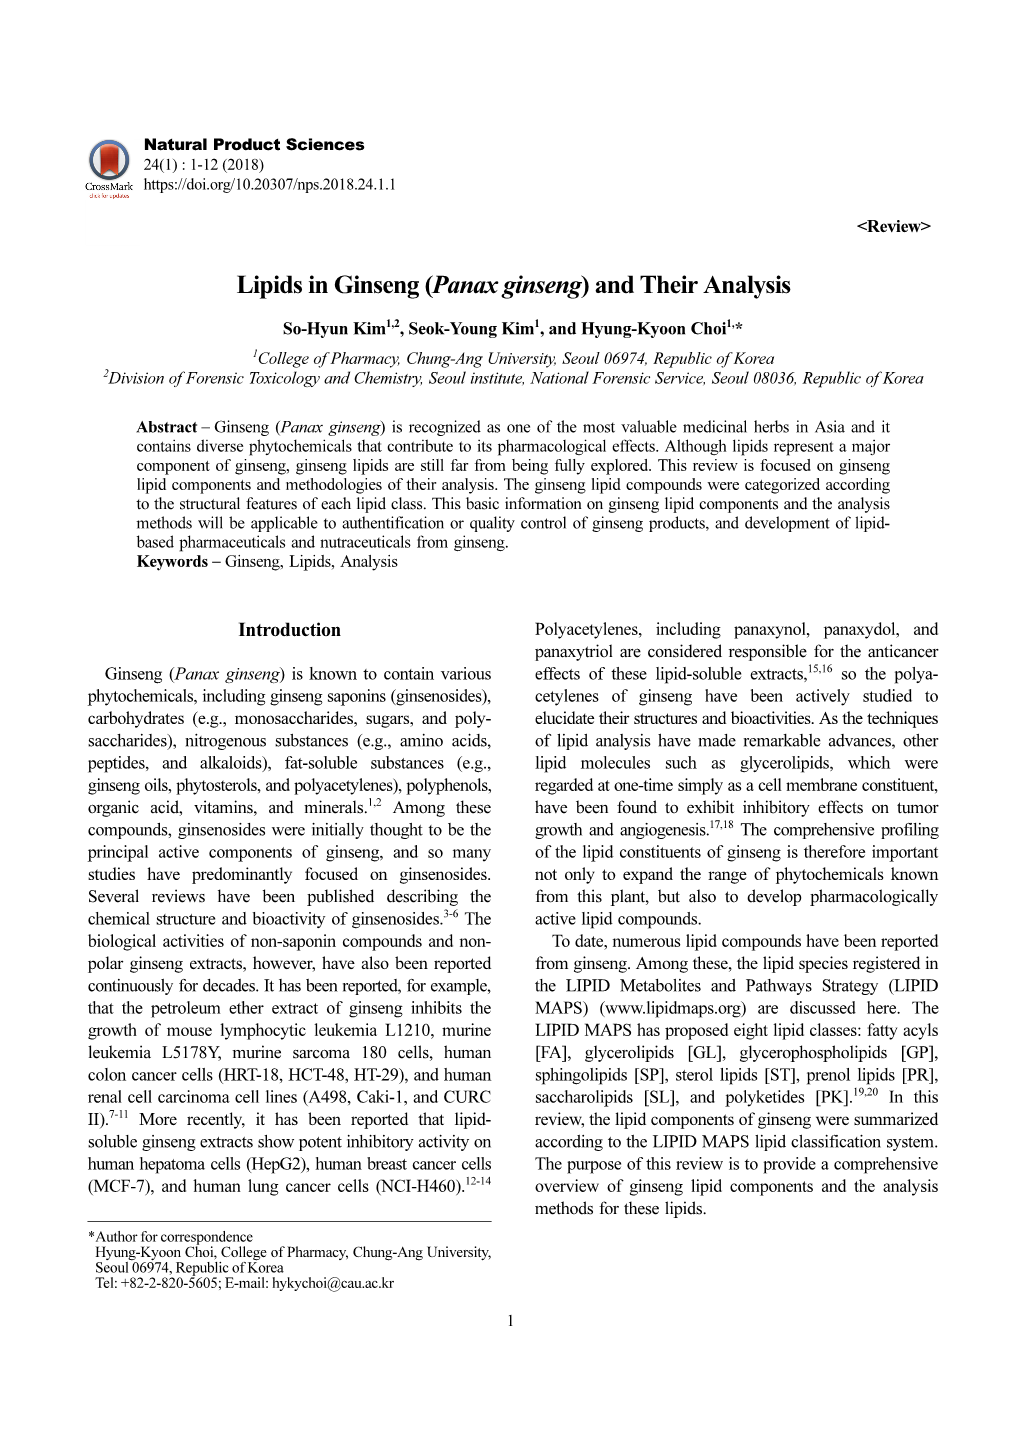 Lipids in Ginseng (Panax Ginseng) and Their Analysis